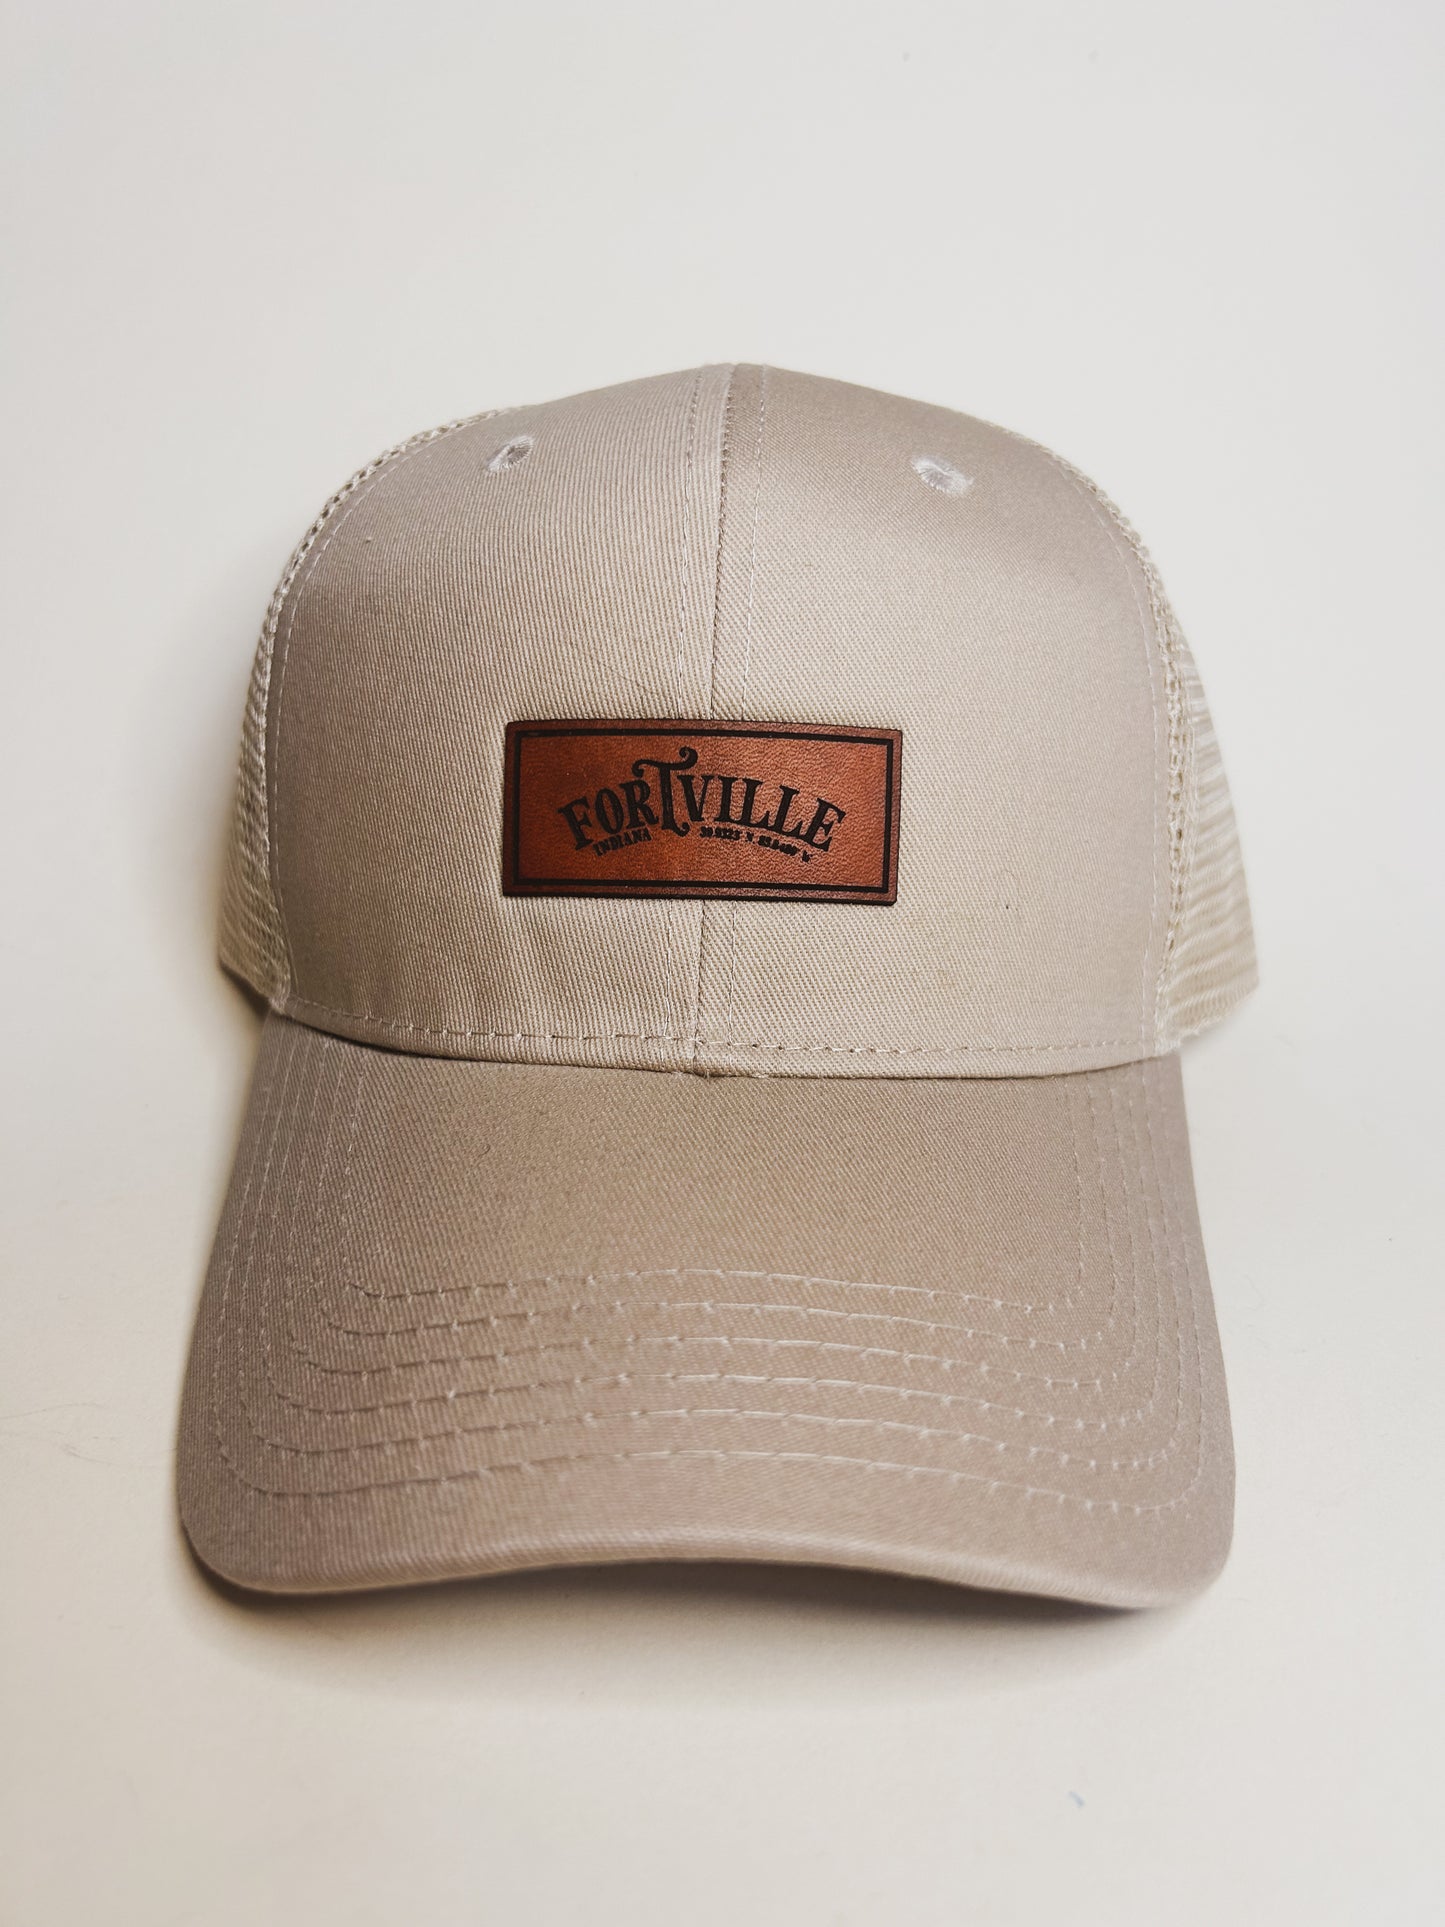 Fortville Leather Patch on Khaki Baseball Hat